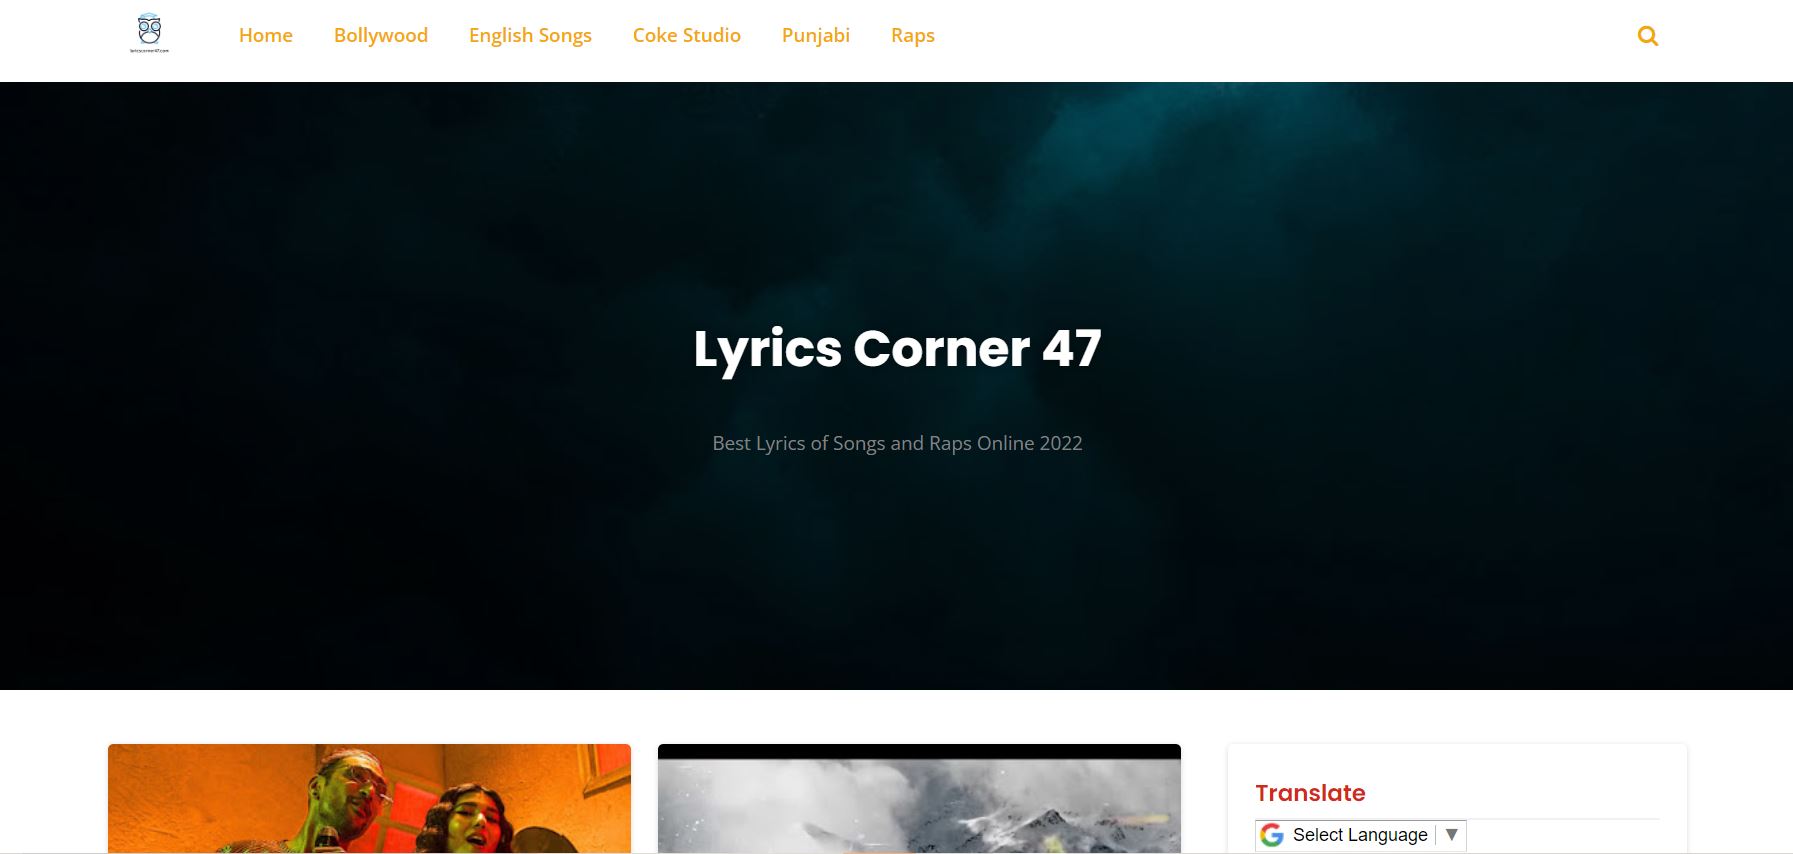 Lyrics Corner 47